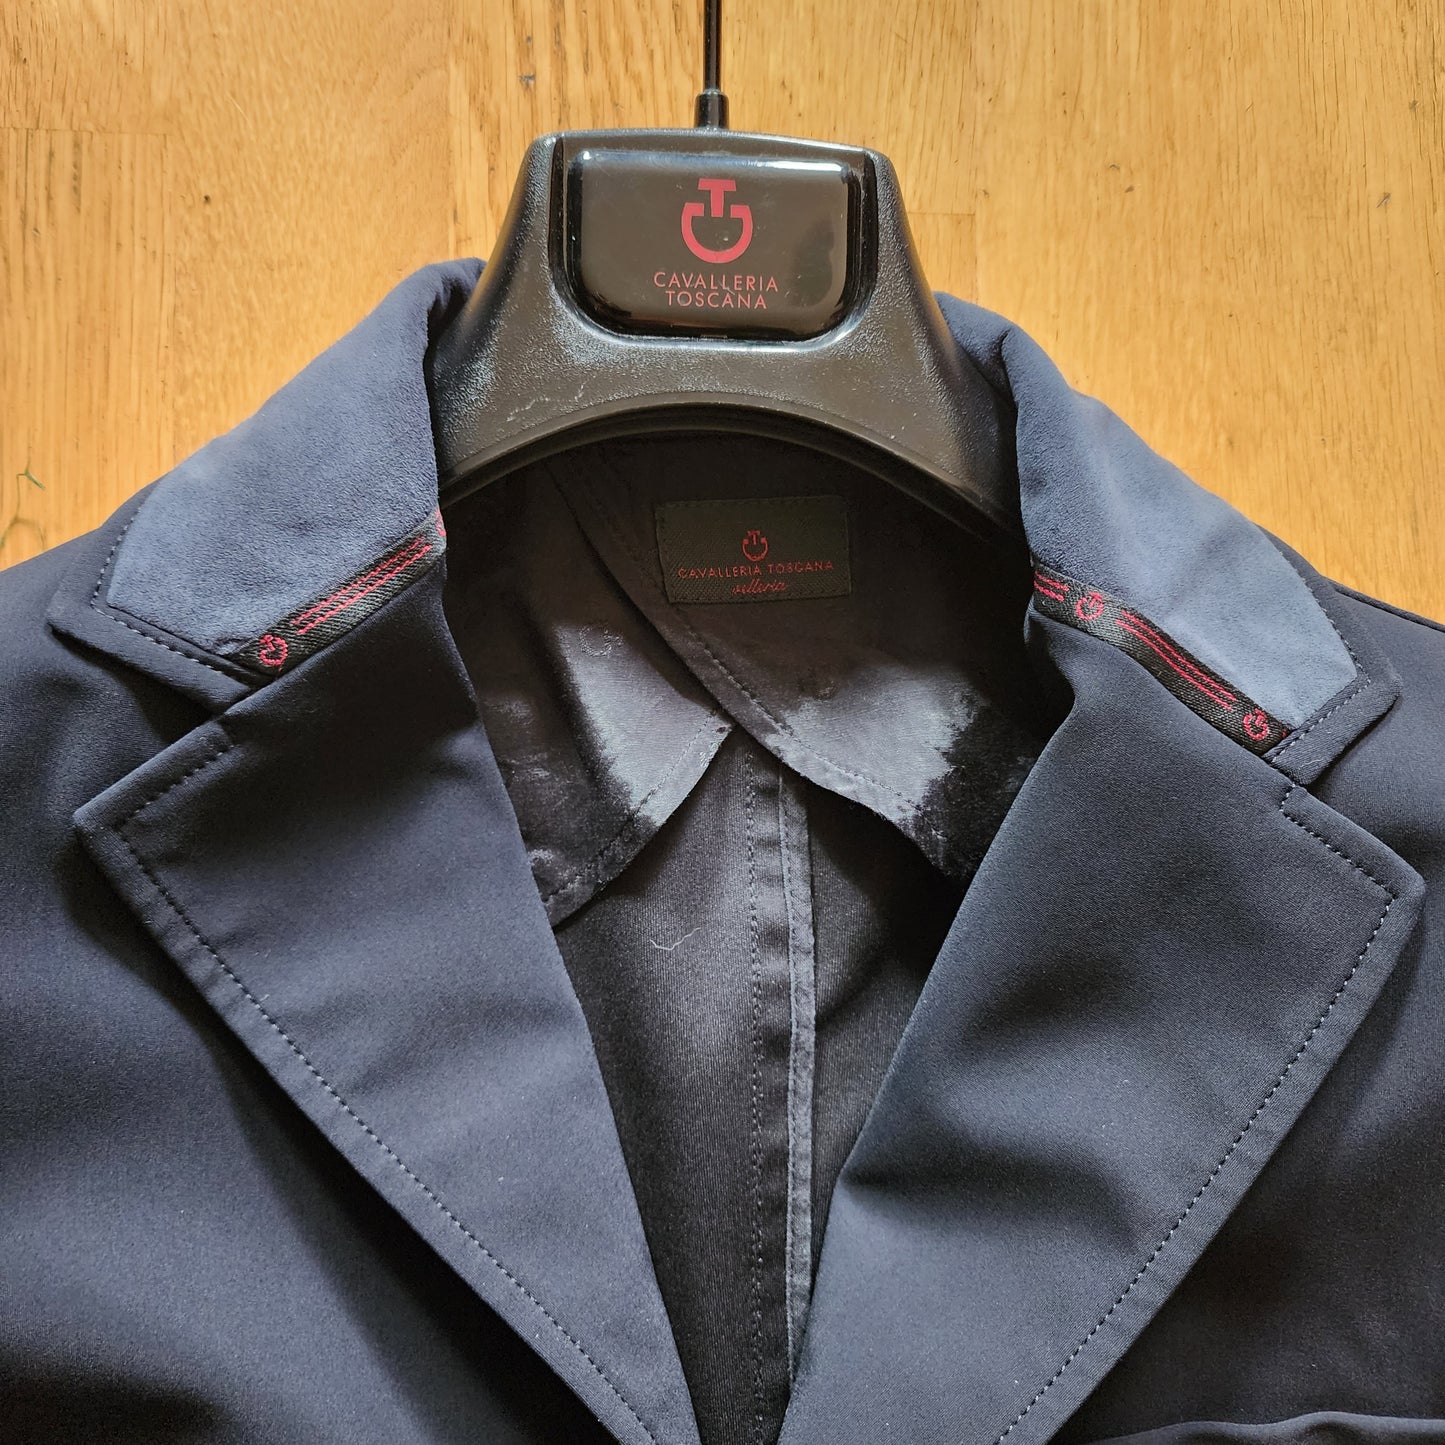 Cavalleria Toscana black show jacket, mens L to XL